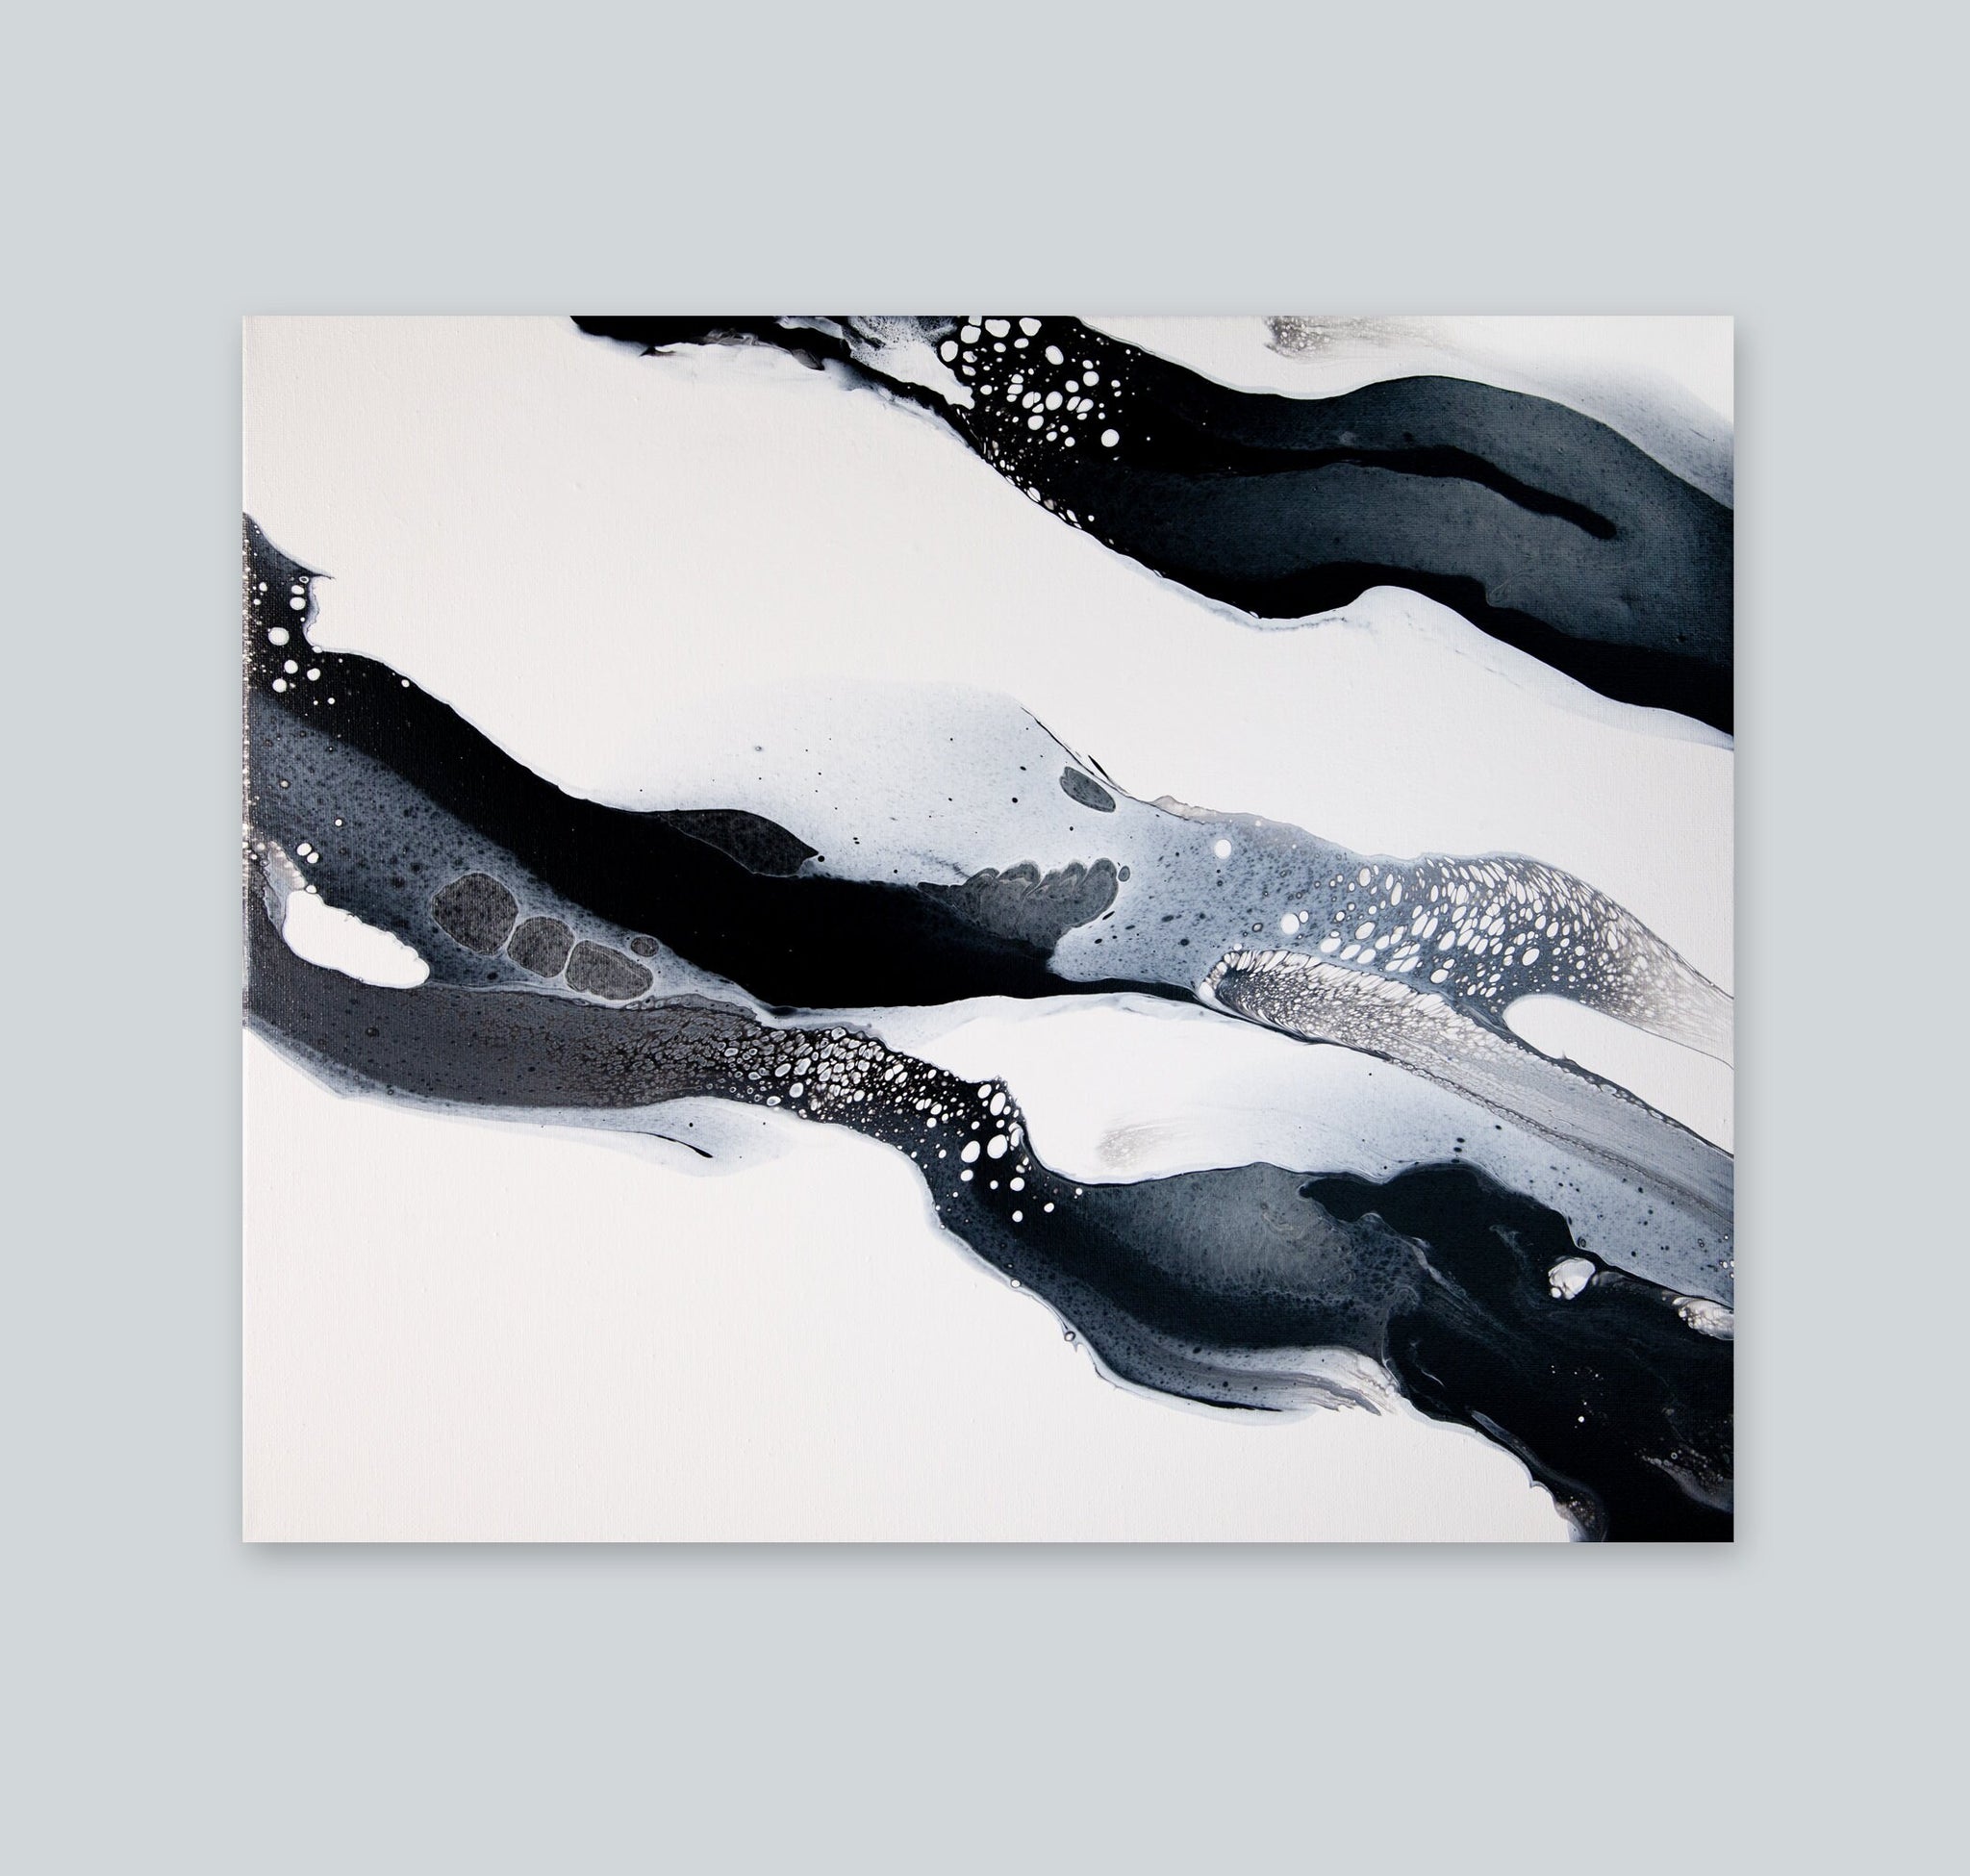 Abstract Acrylic Black Paint Stock Photo - Image of acrylic, flow: 69209004